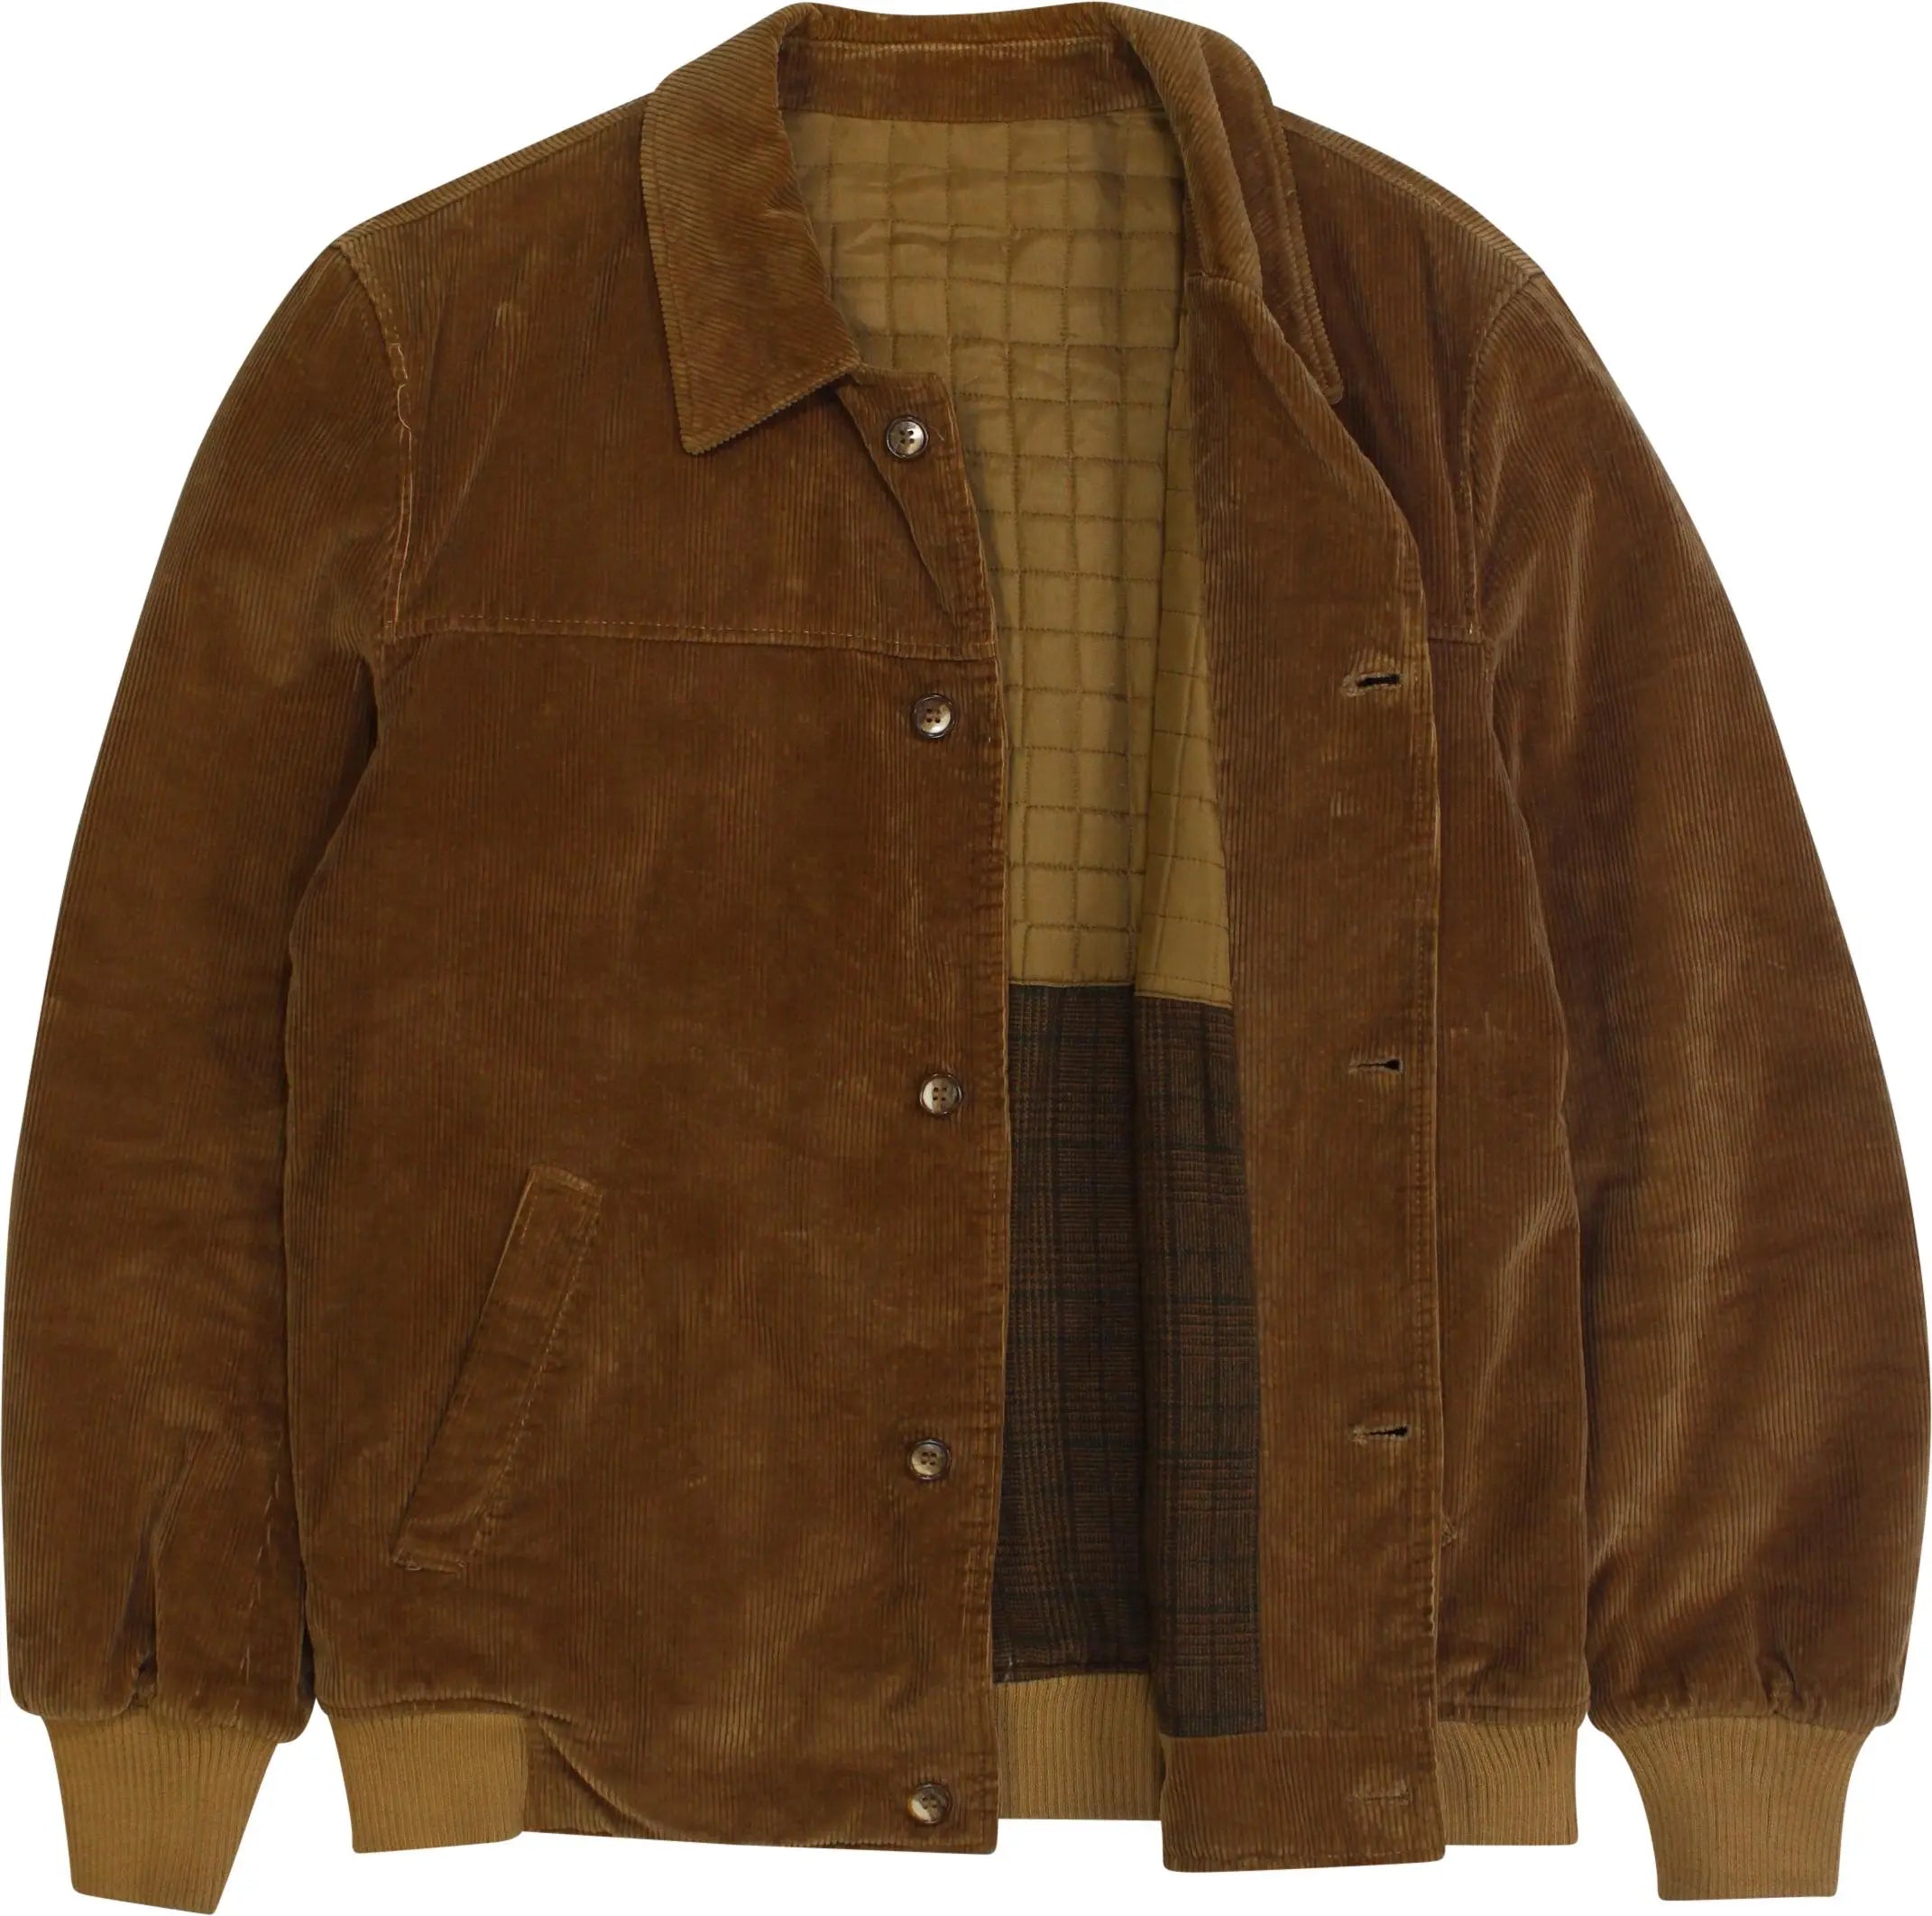 Sportmar - Corduroy Jacket- ThriftTale.com - Vintage and second handclothing